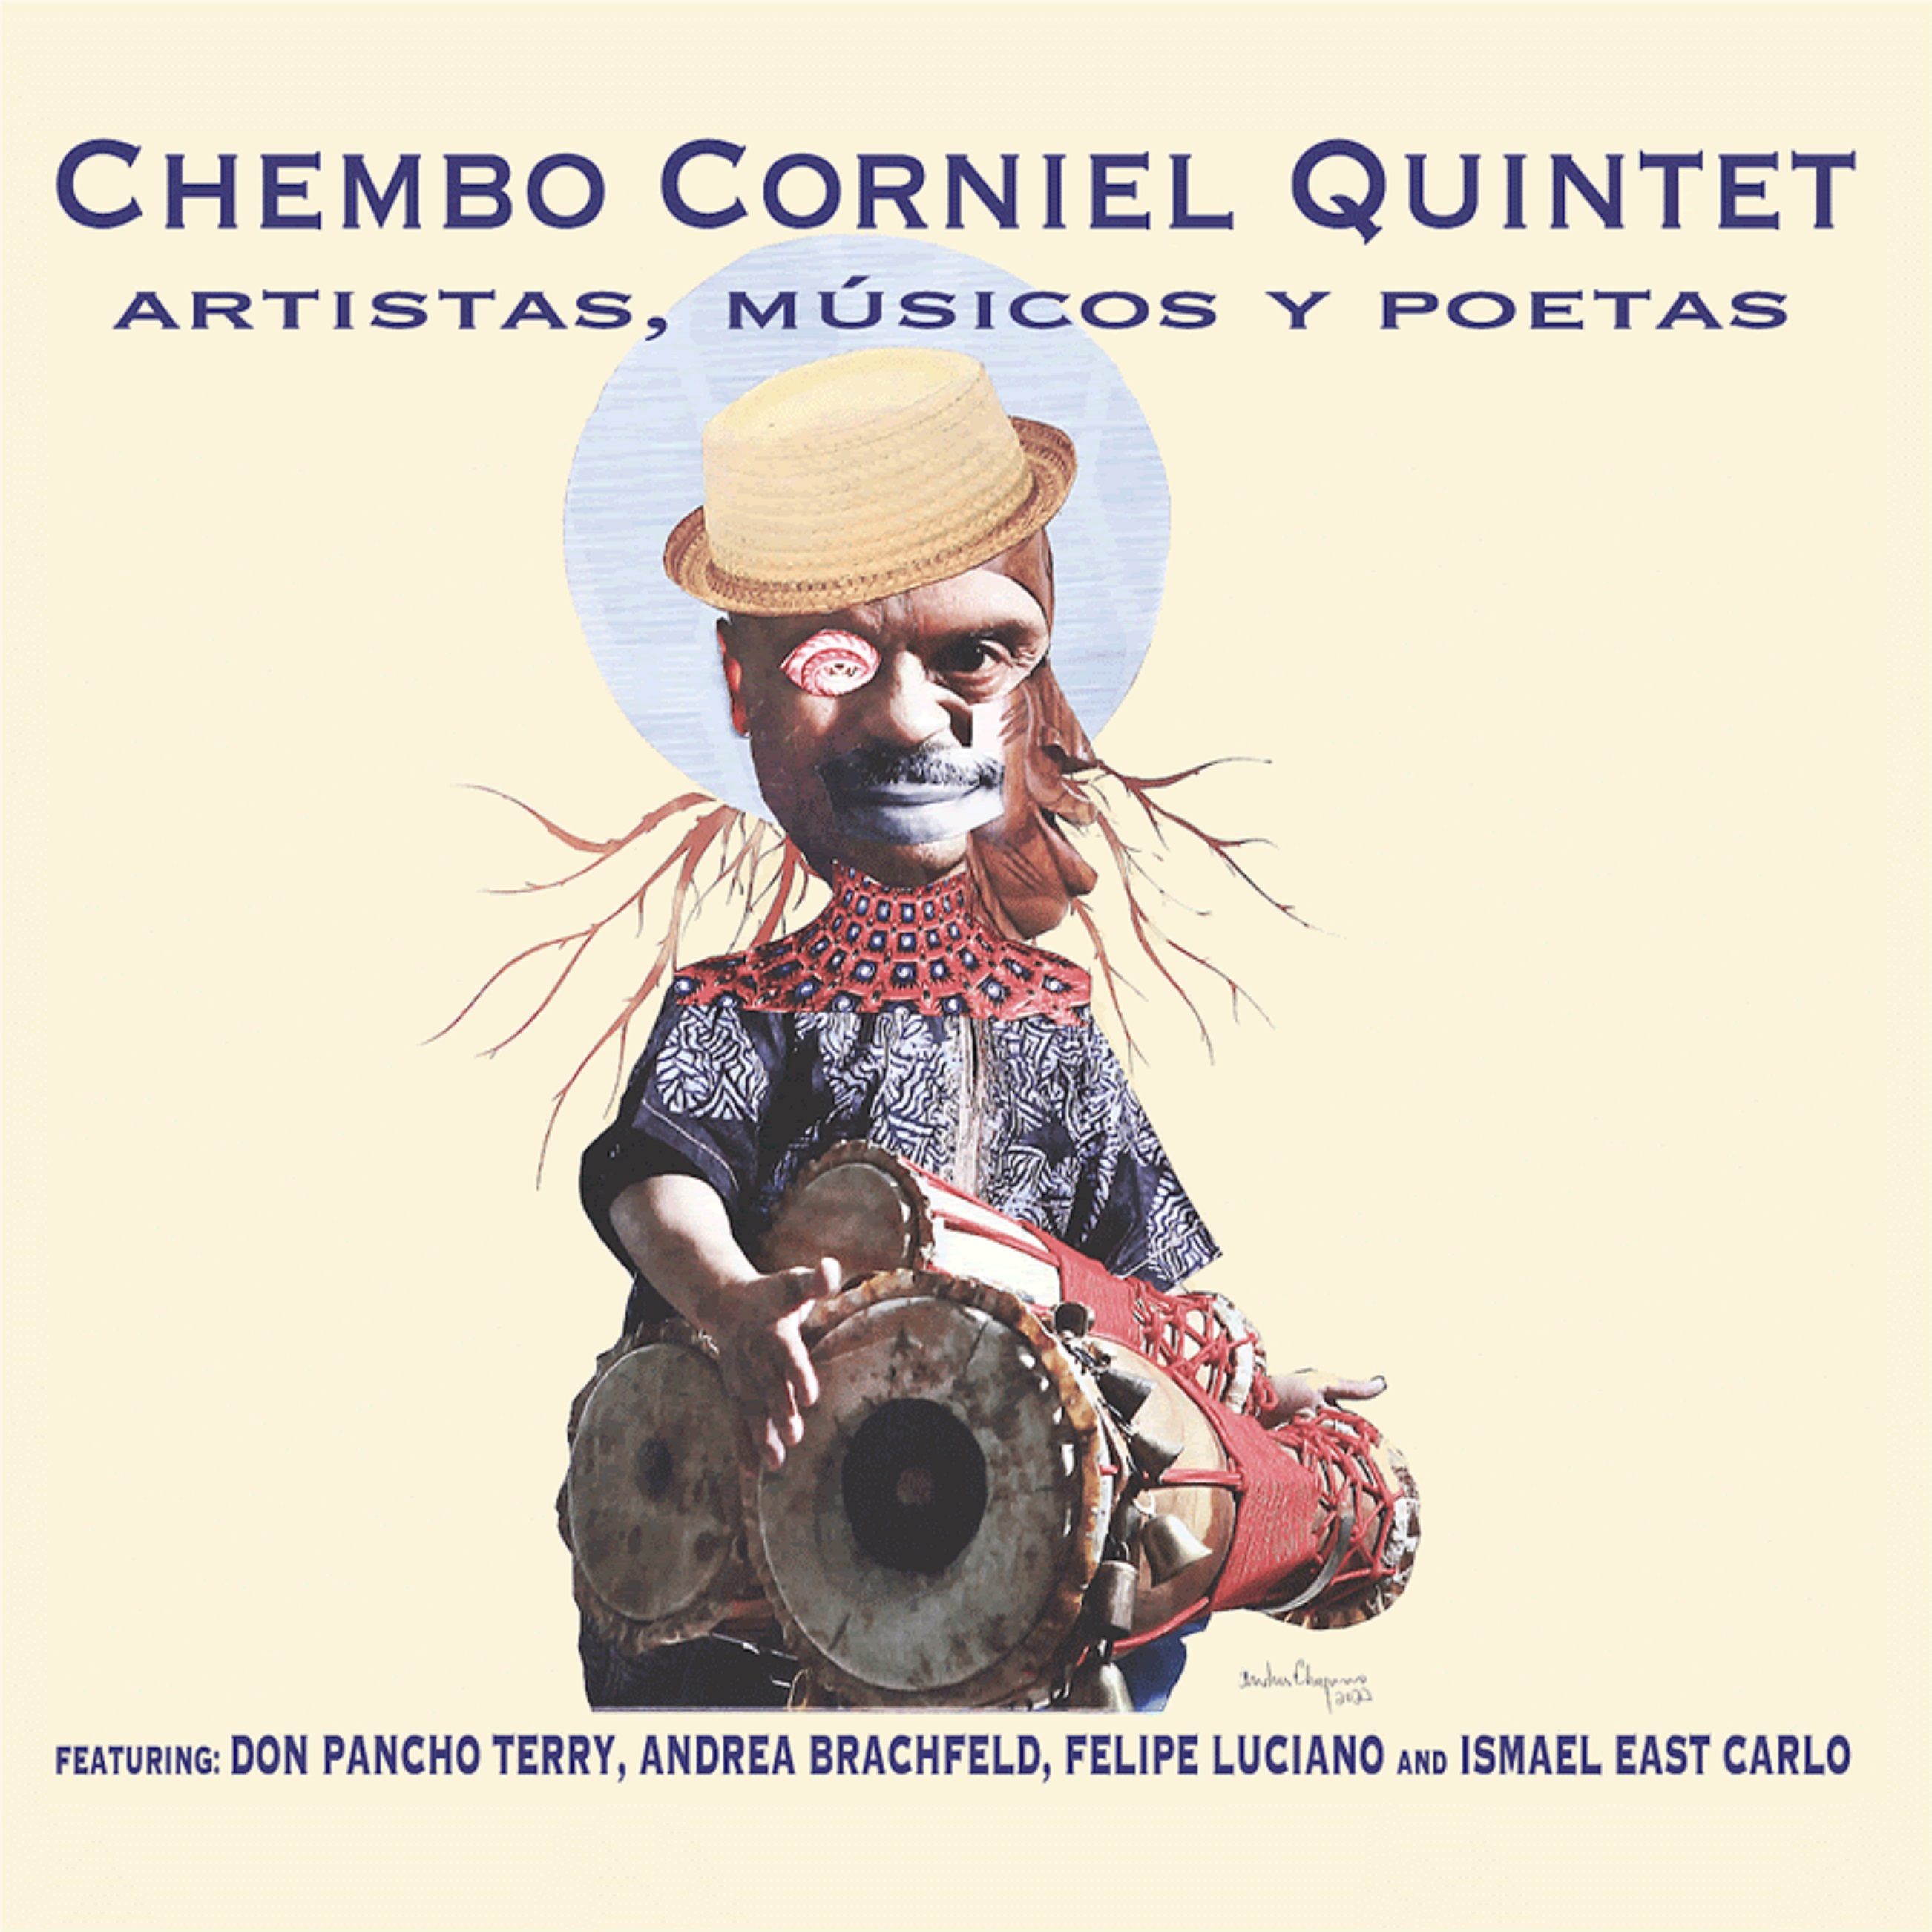 Available Now: Chembo Corniel Quintet – “Artistas, Musicos Y Poetas”